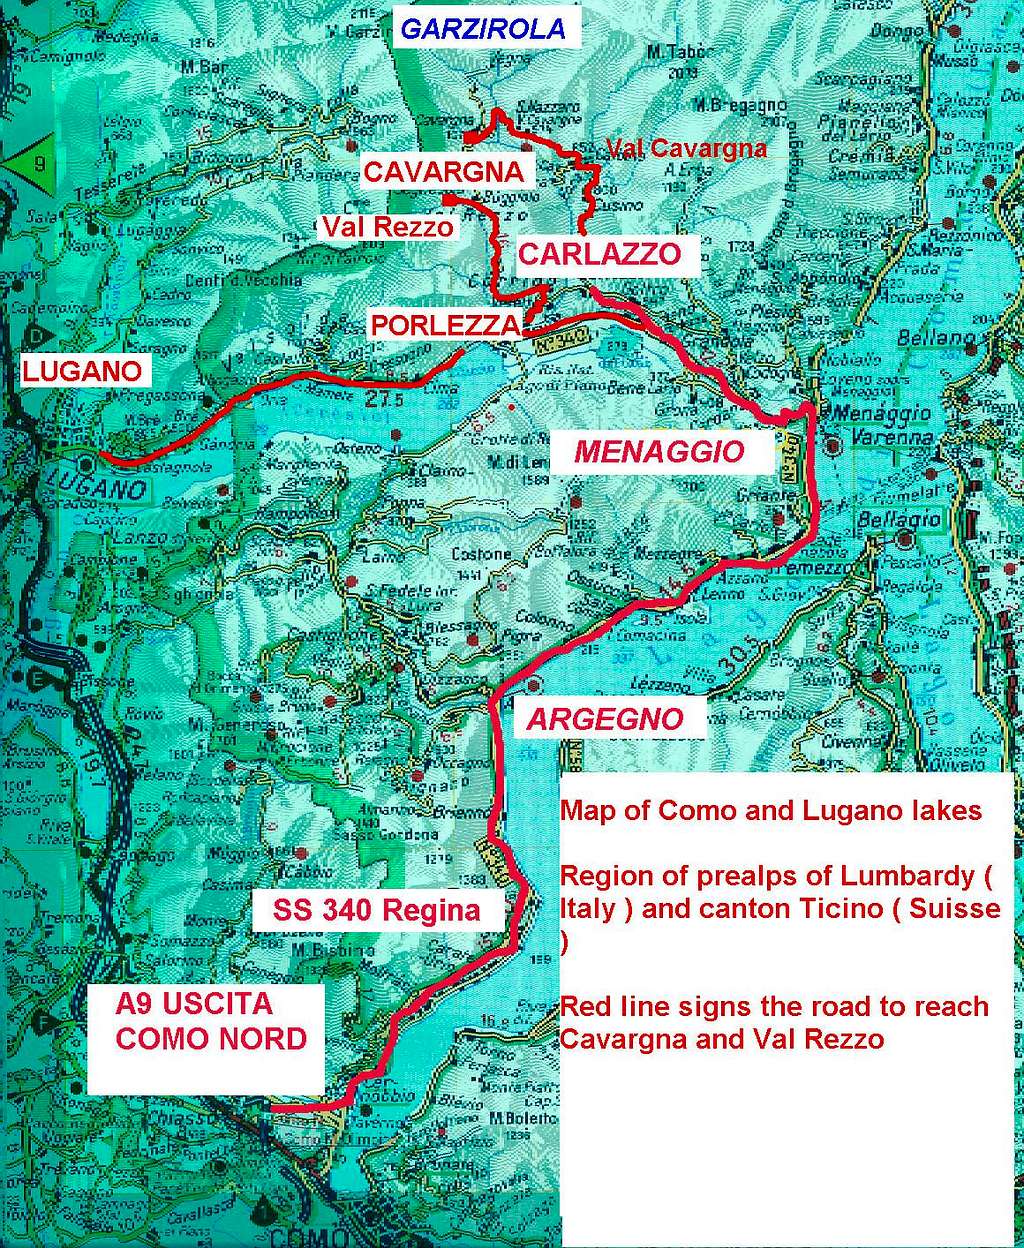 Map of Garzirola area